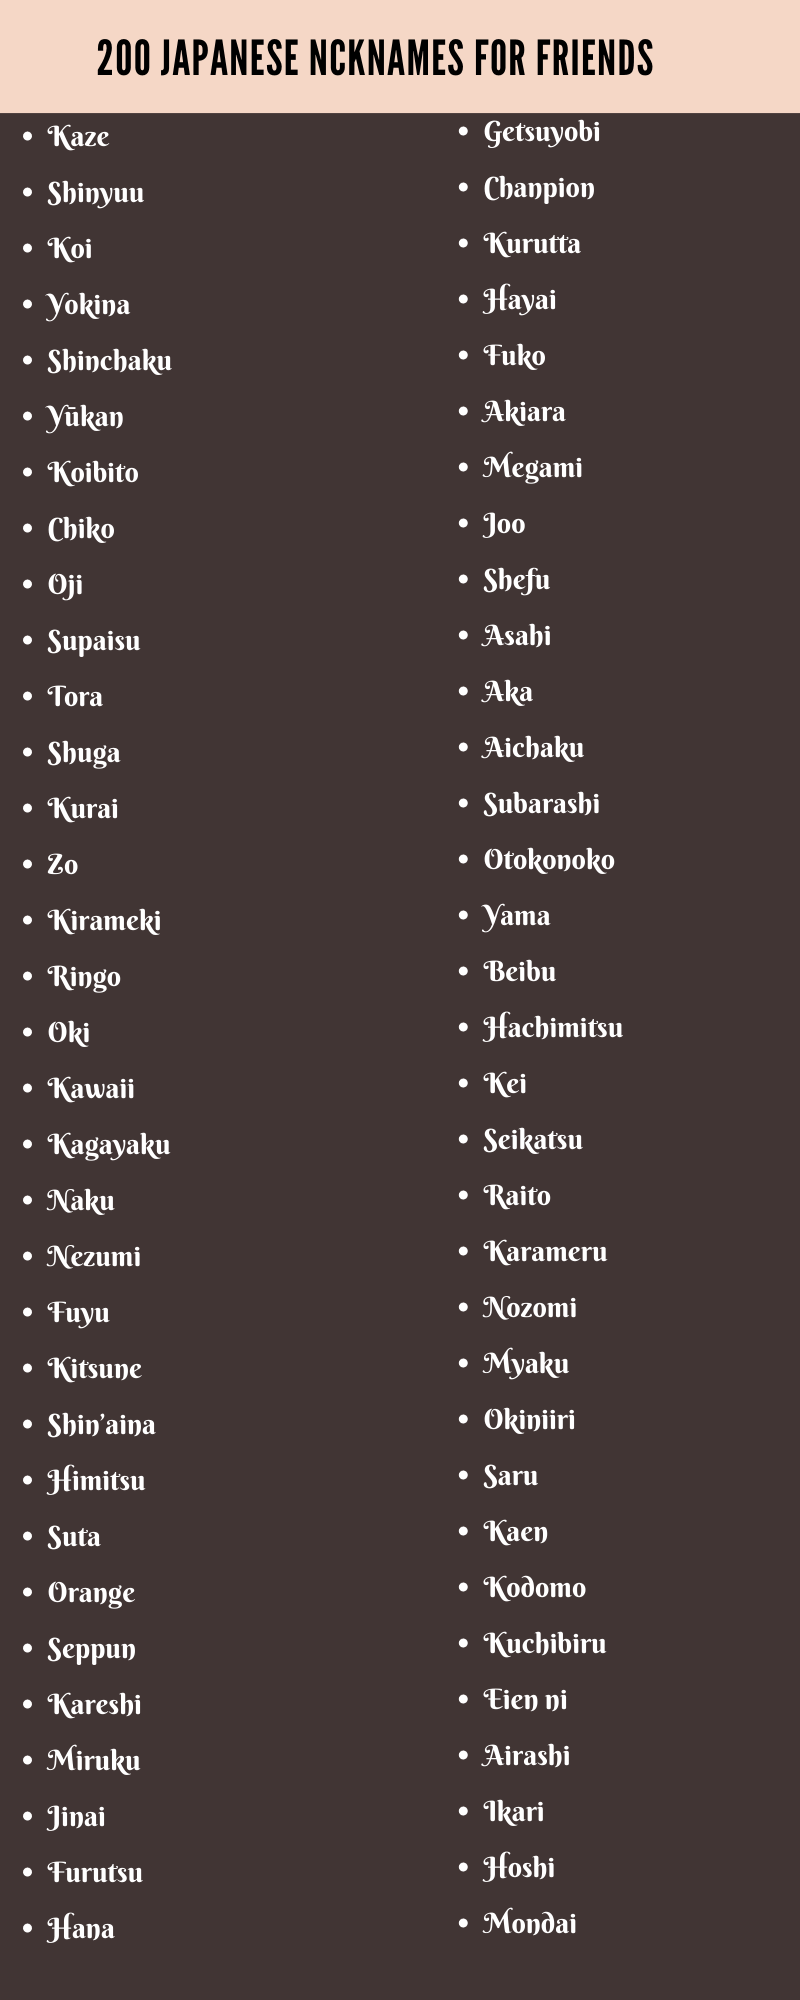 Japanese nicknames For Friends